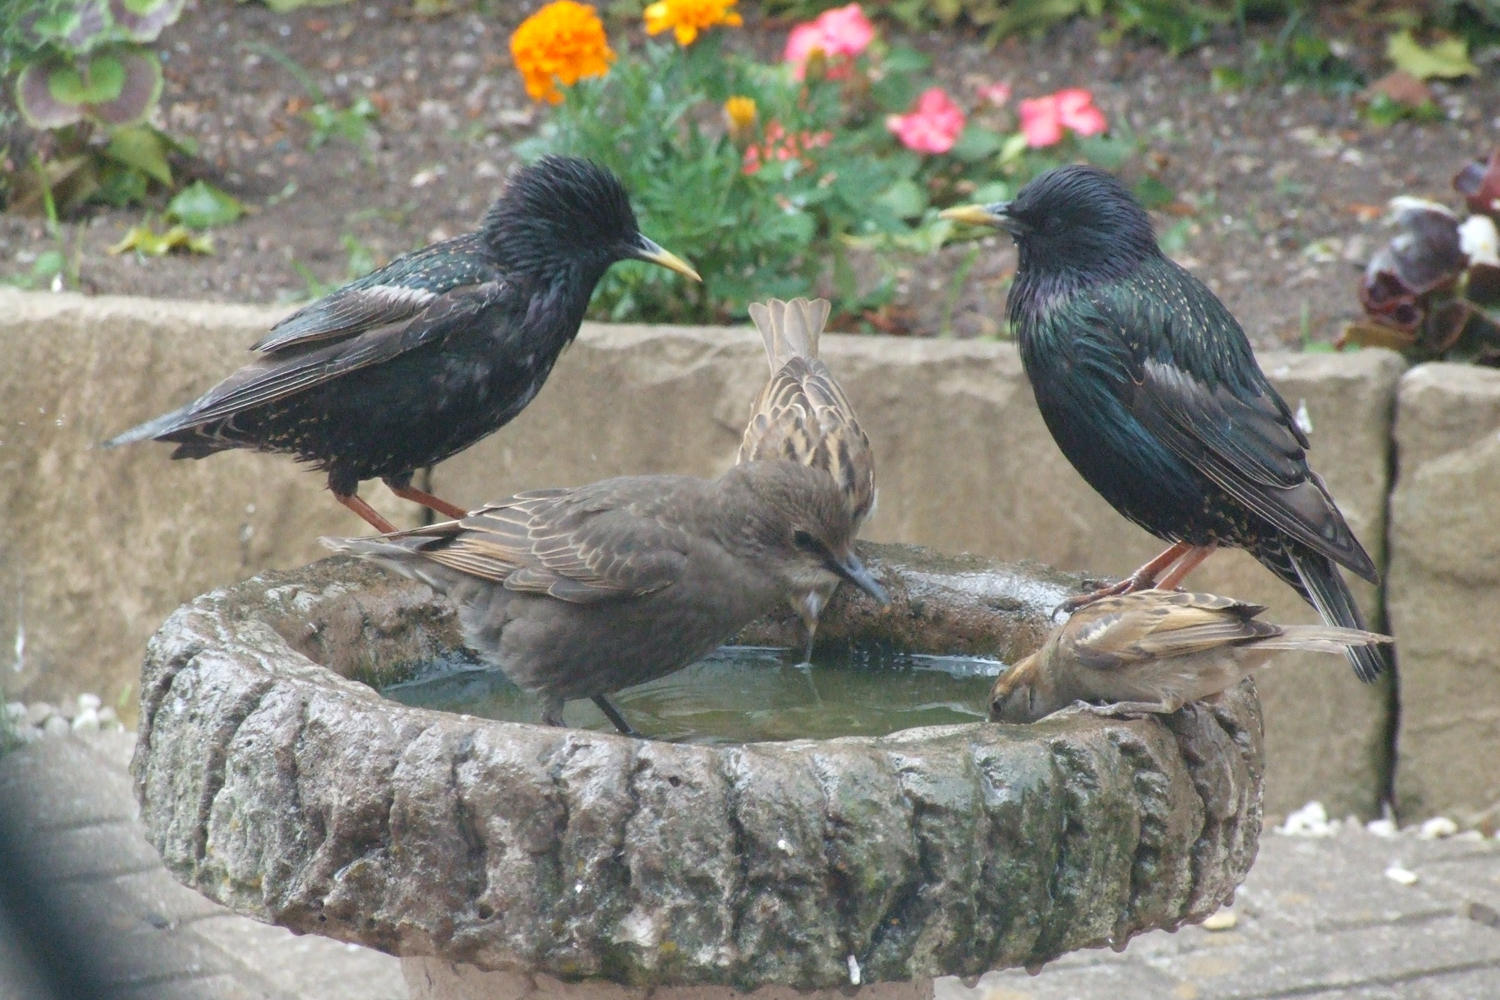 Starlings around a bird bath